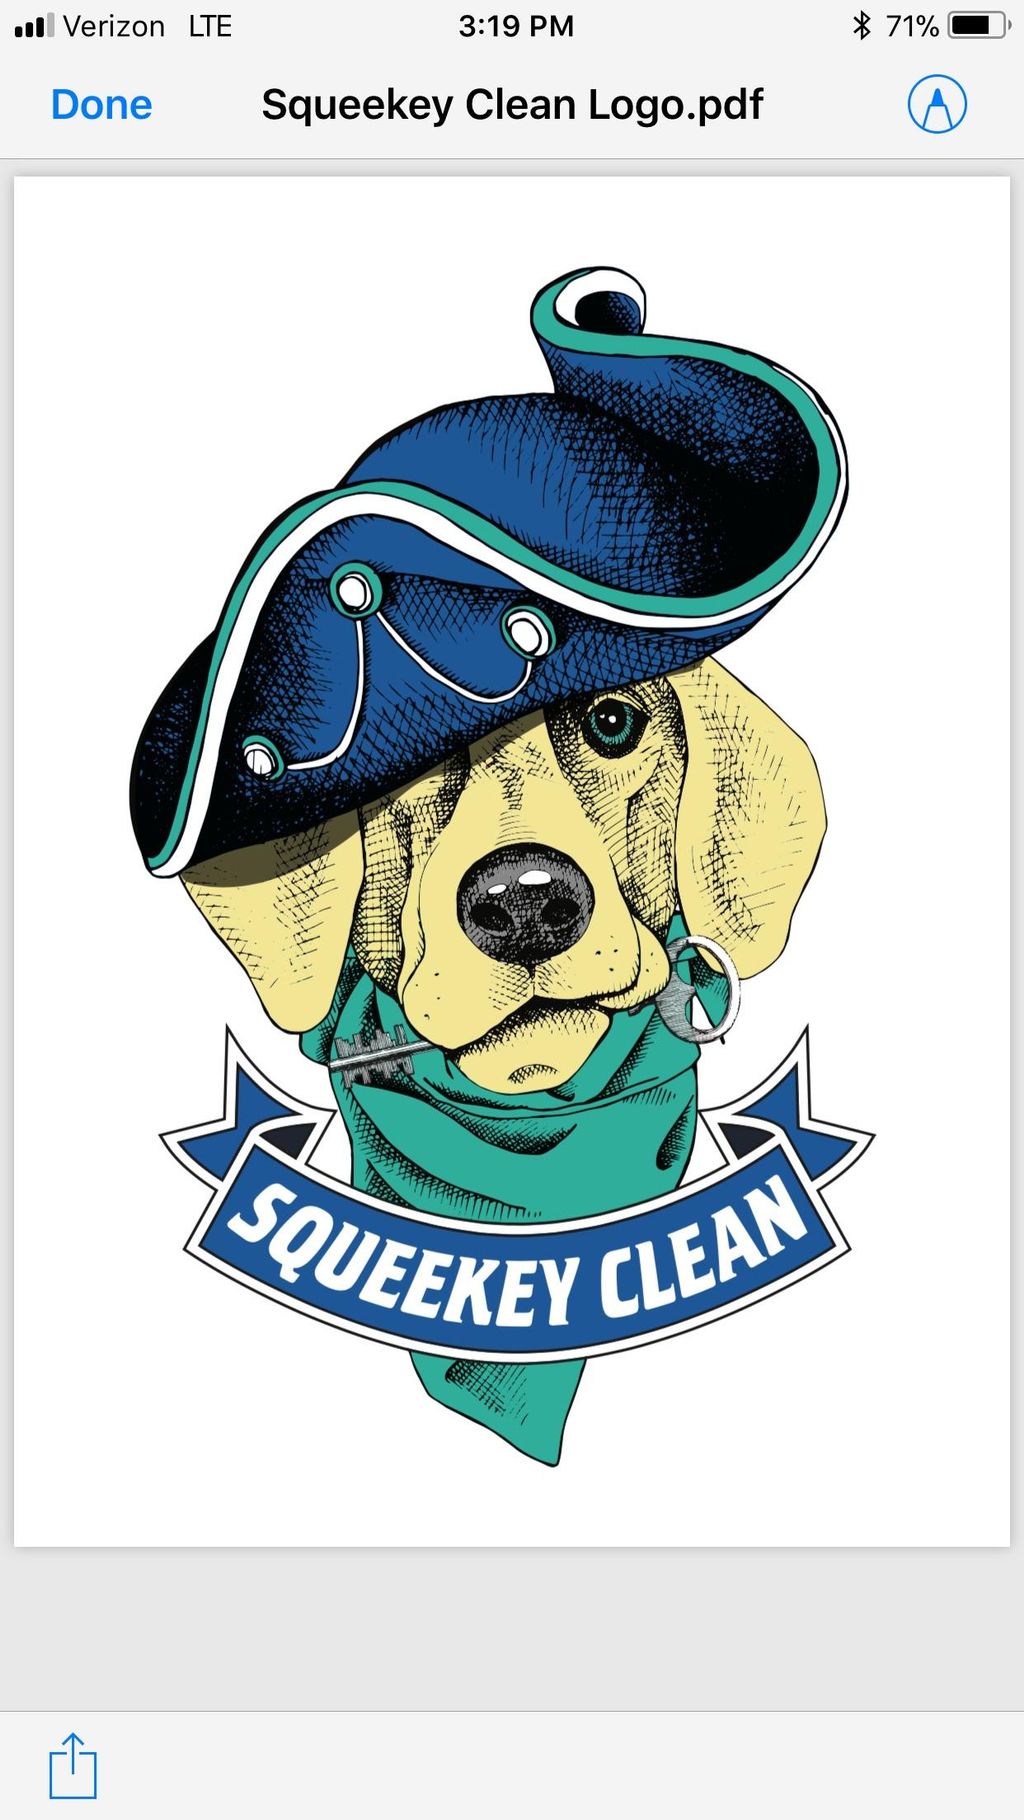 Squeekey Clean Floor Solutions LLC